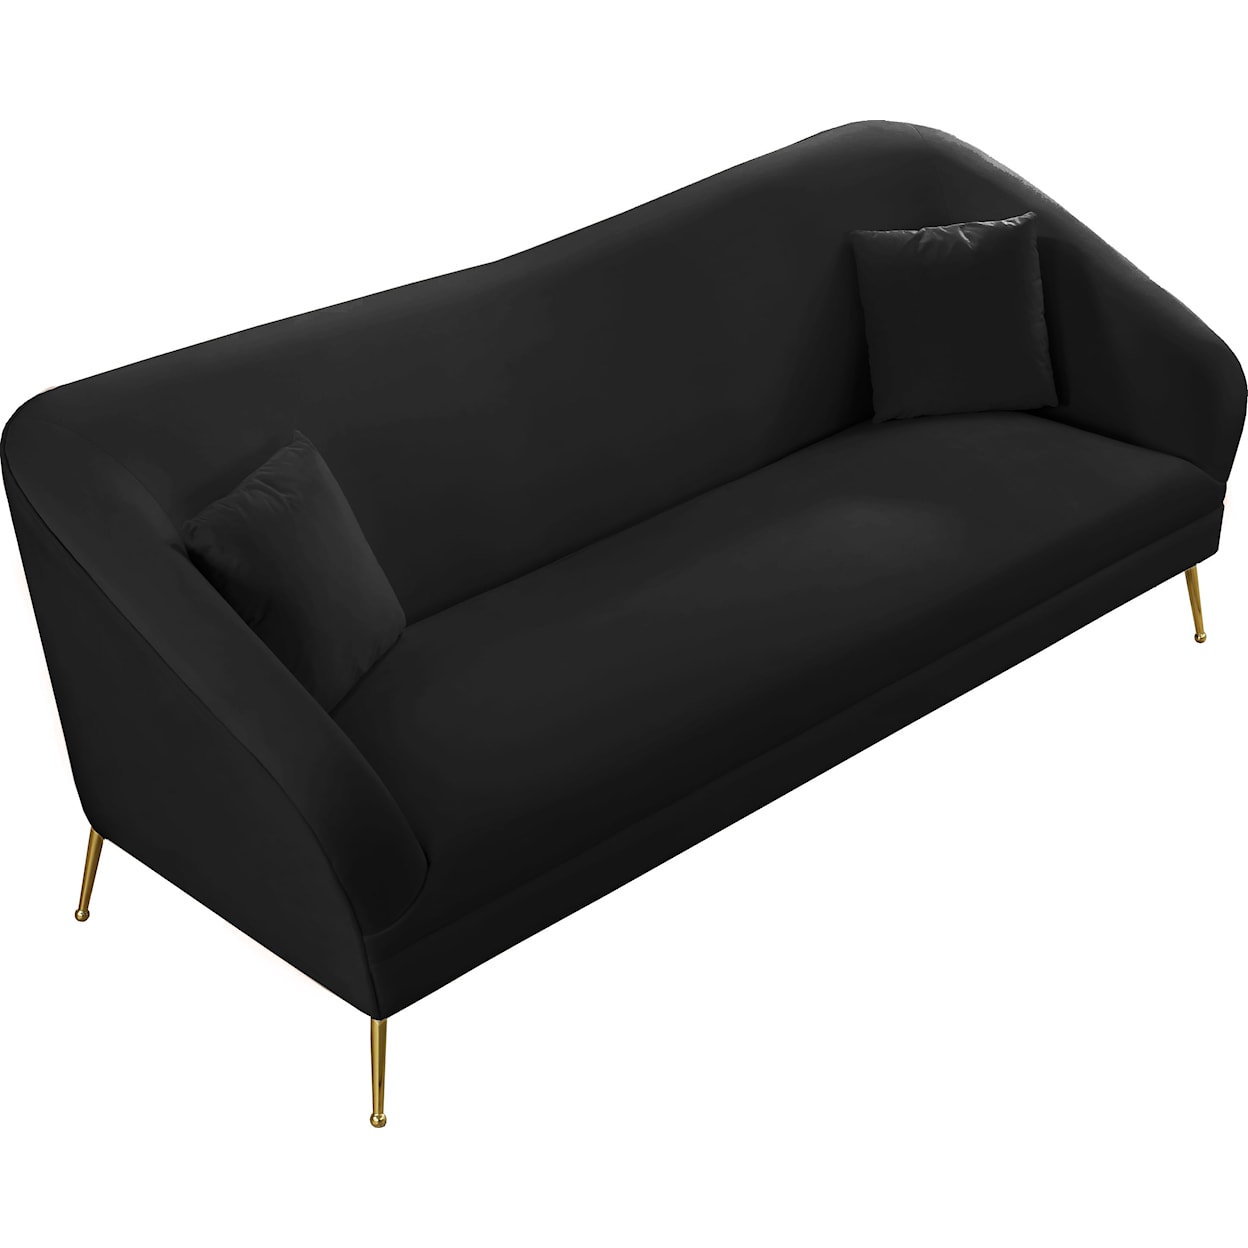 Meridian Furniture Hermosa Sofa